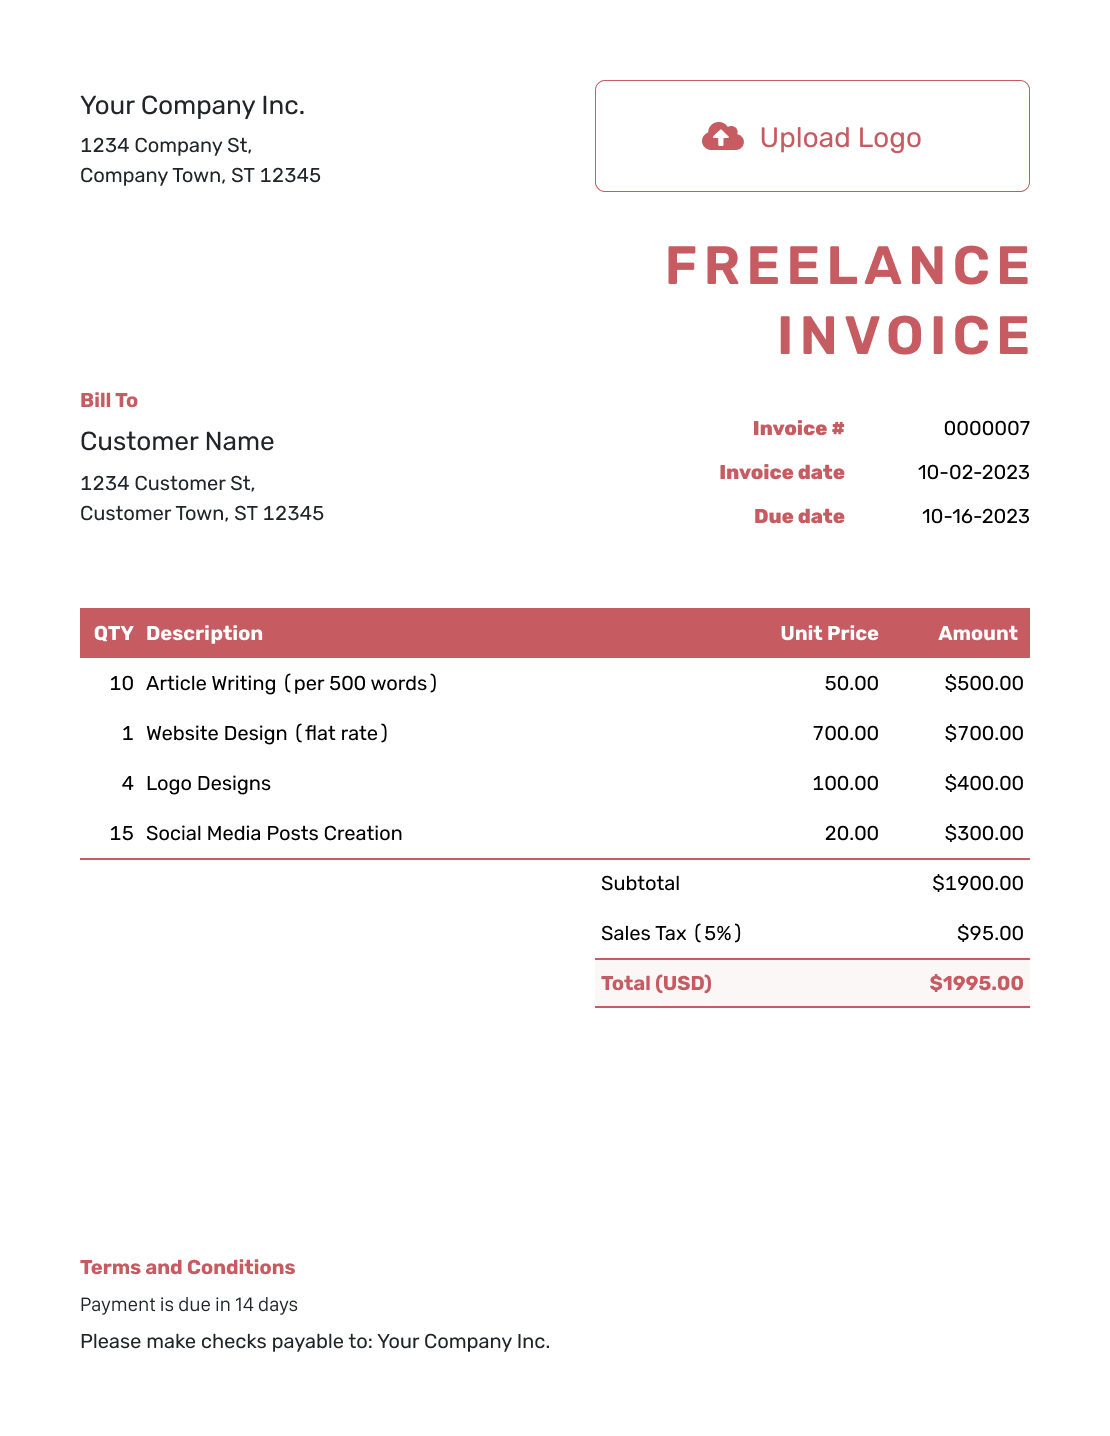 Itemized Freelance Invoice Template